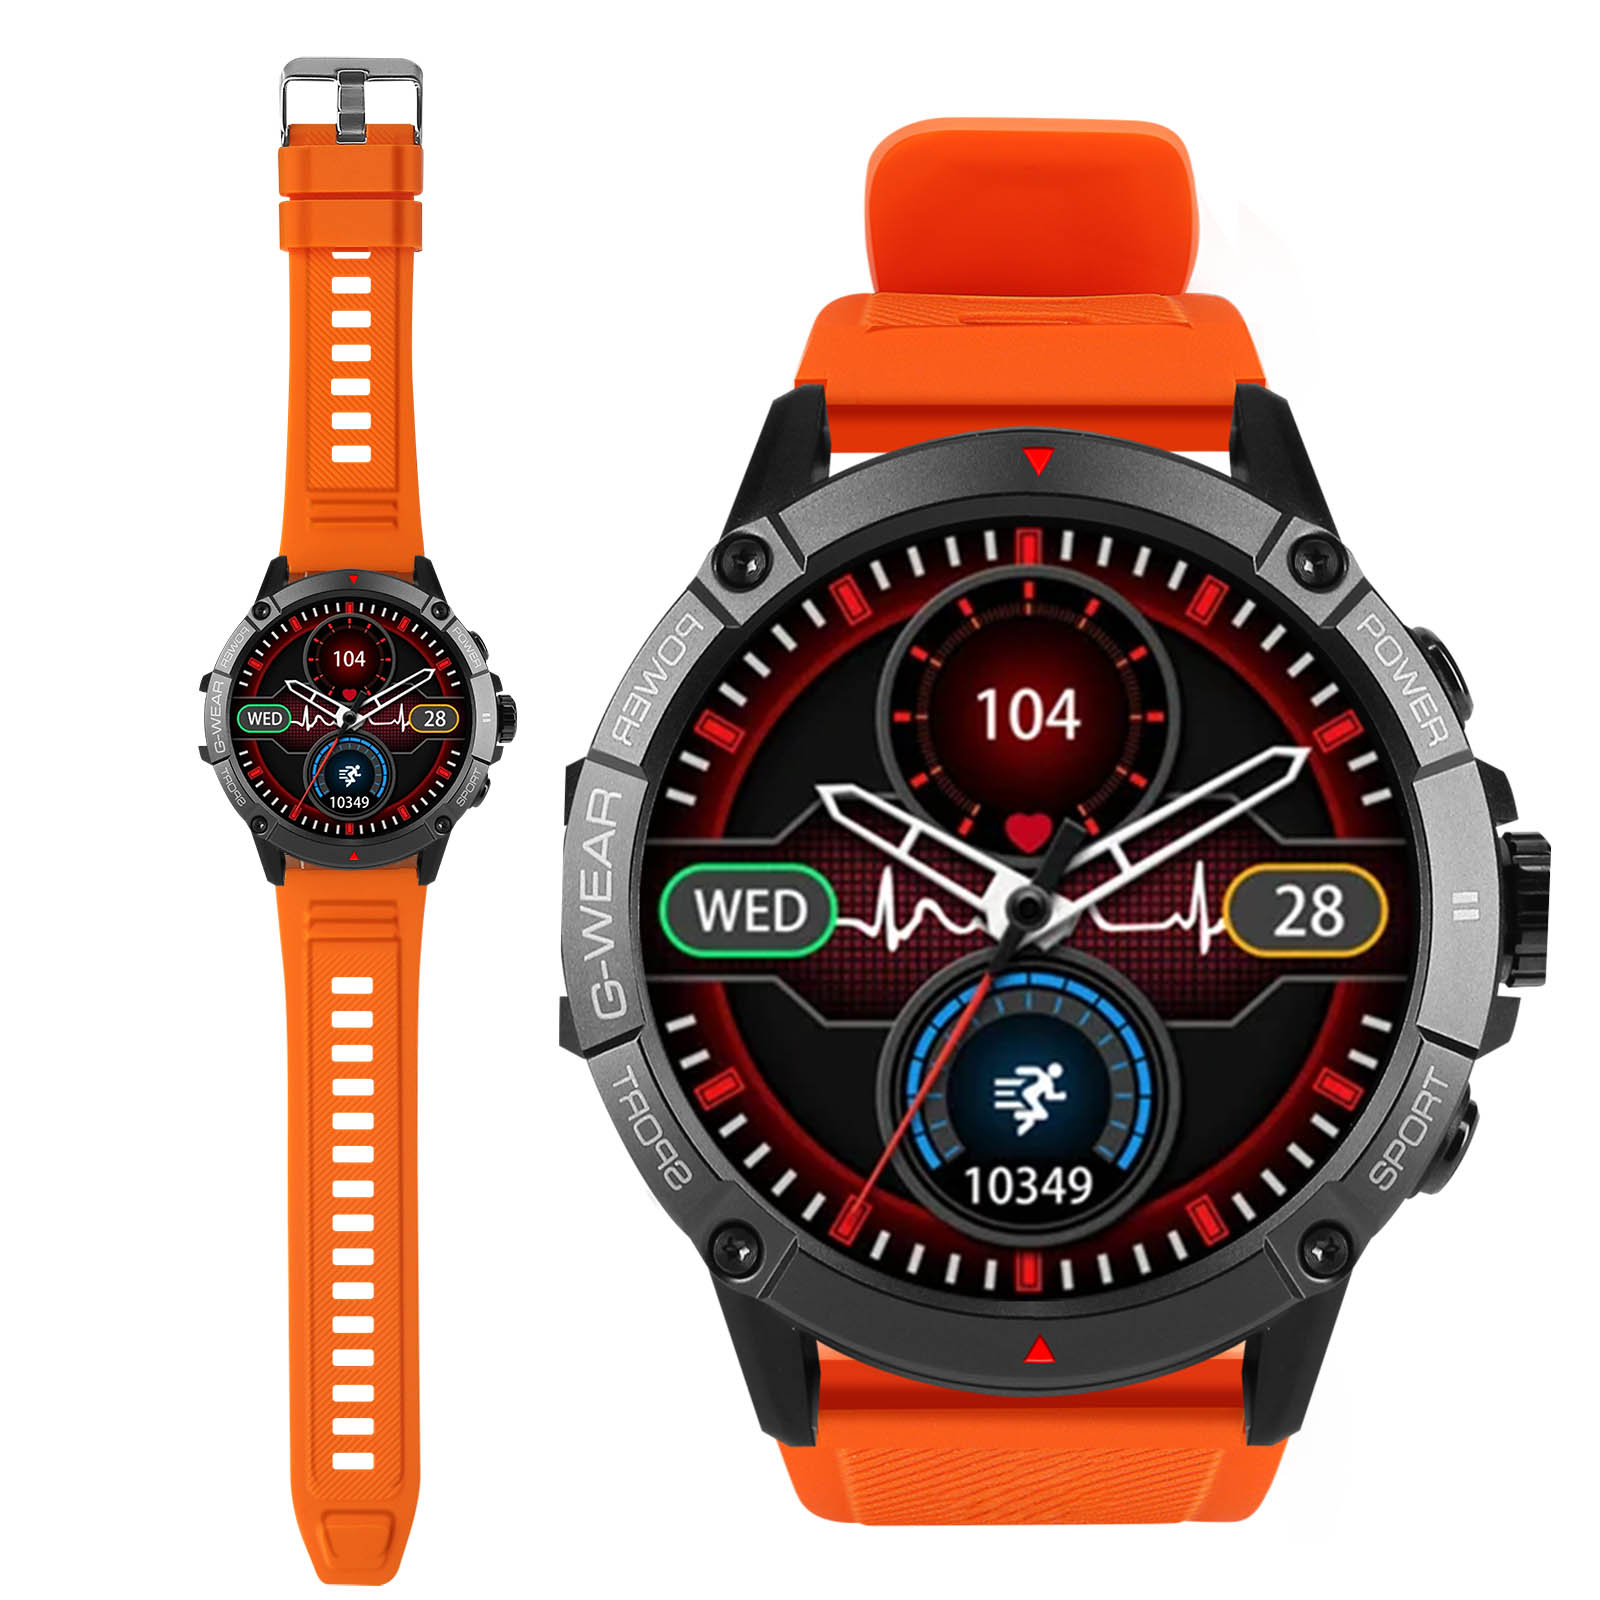 Orologio Xiaomi Maimo Cinturino Nero/Arancio - Smartwatch